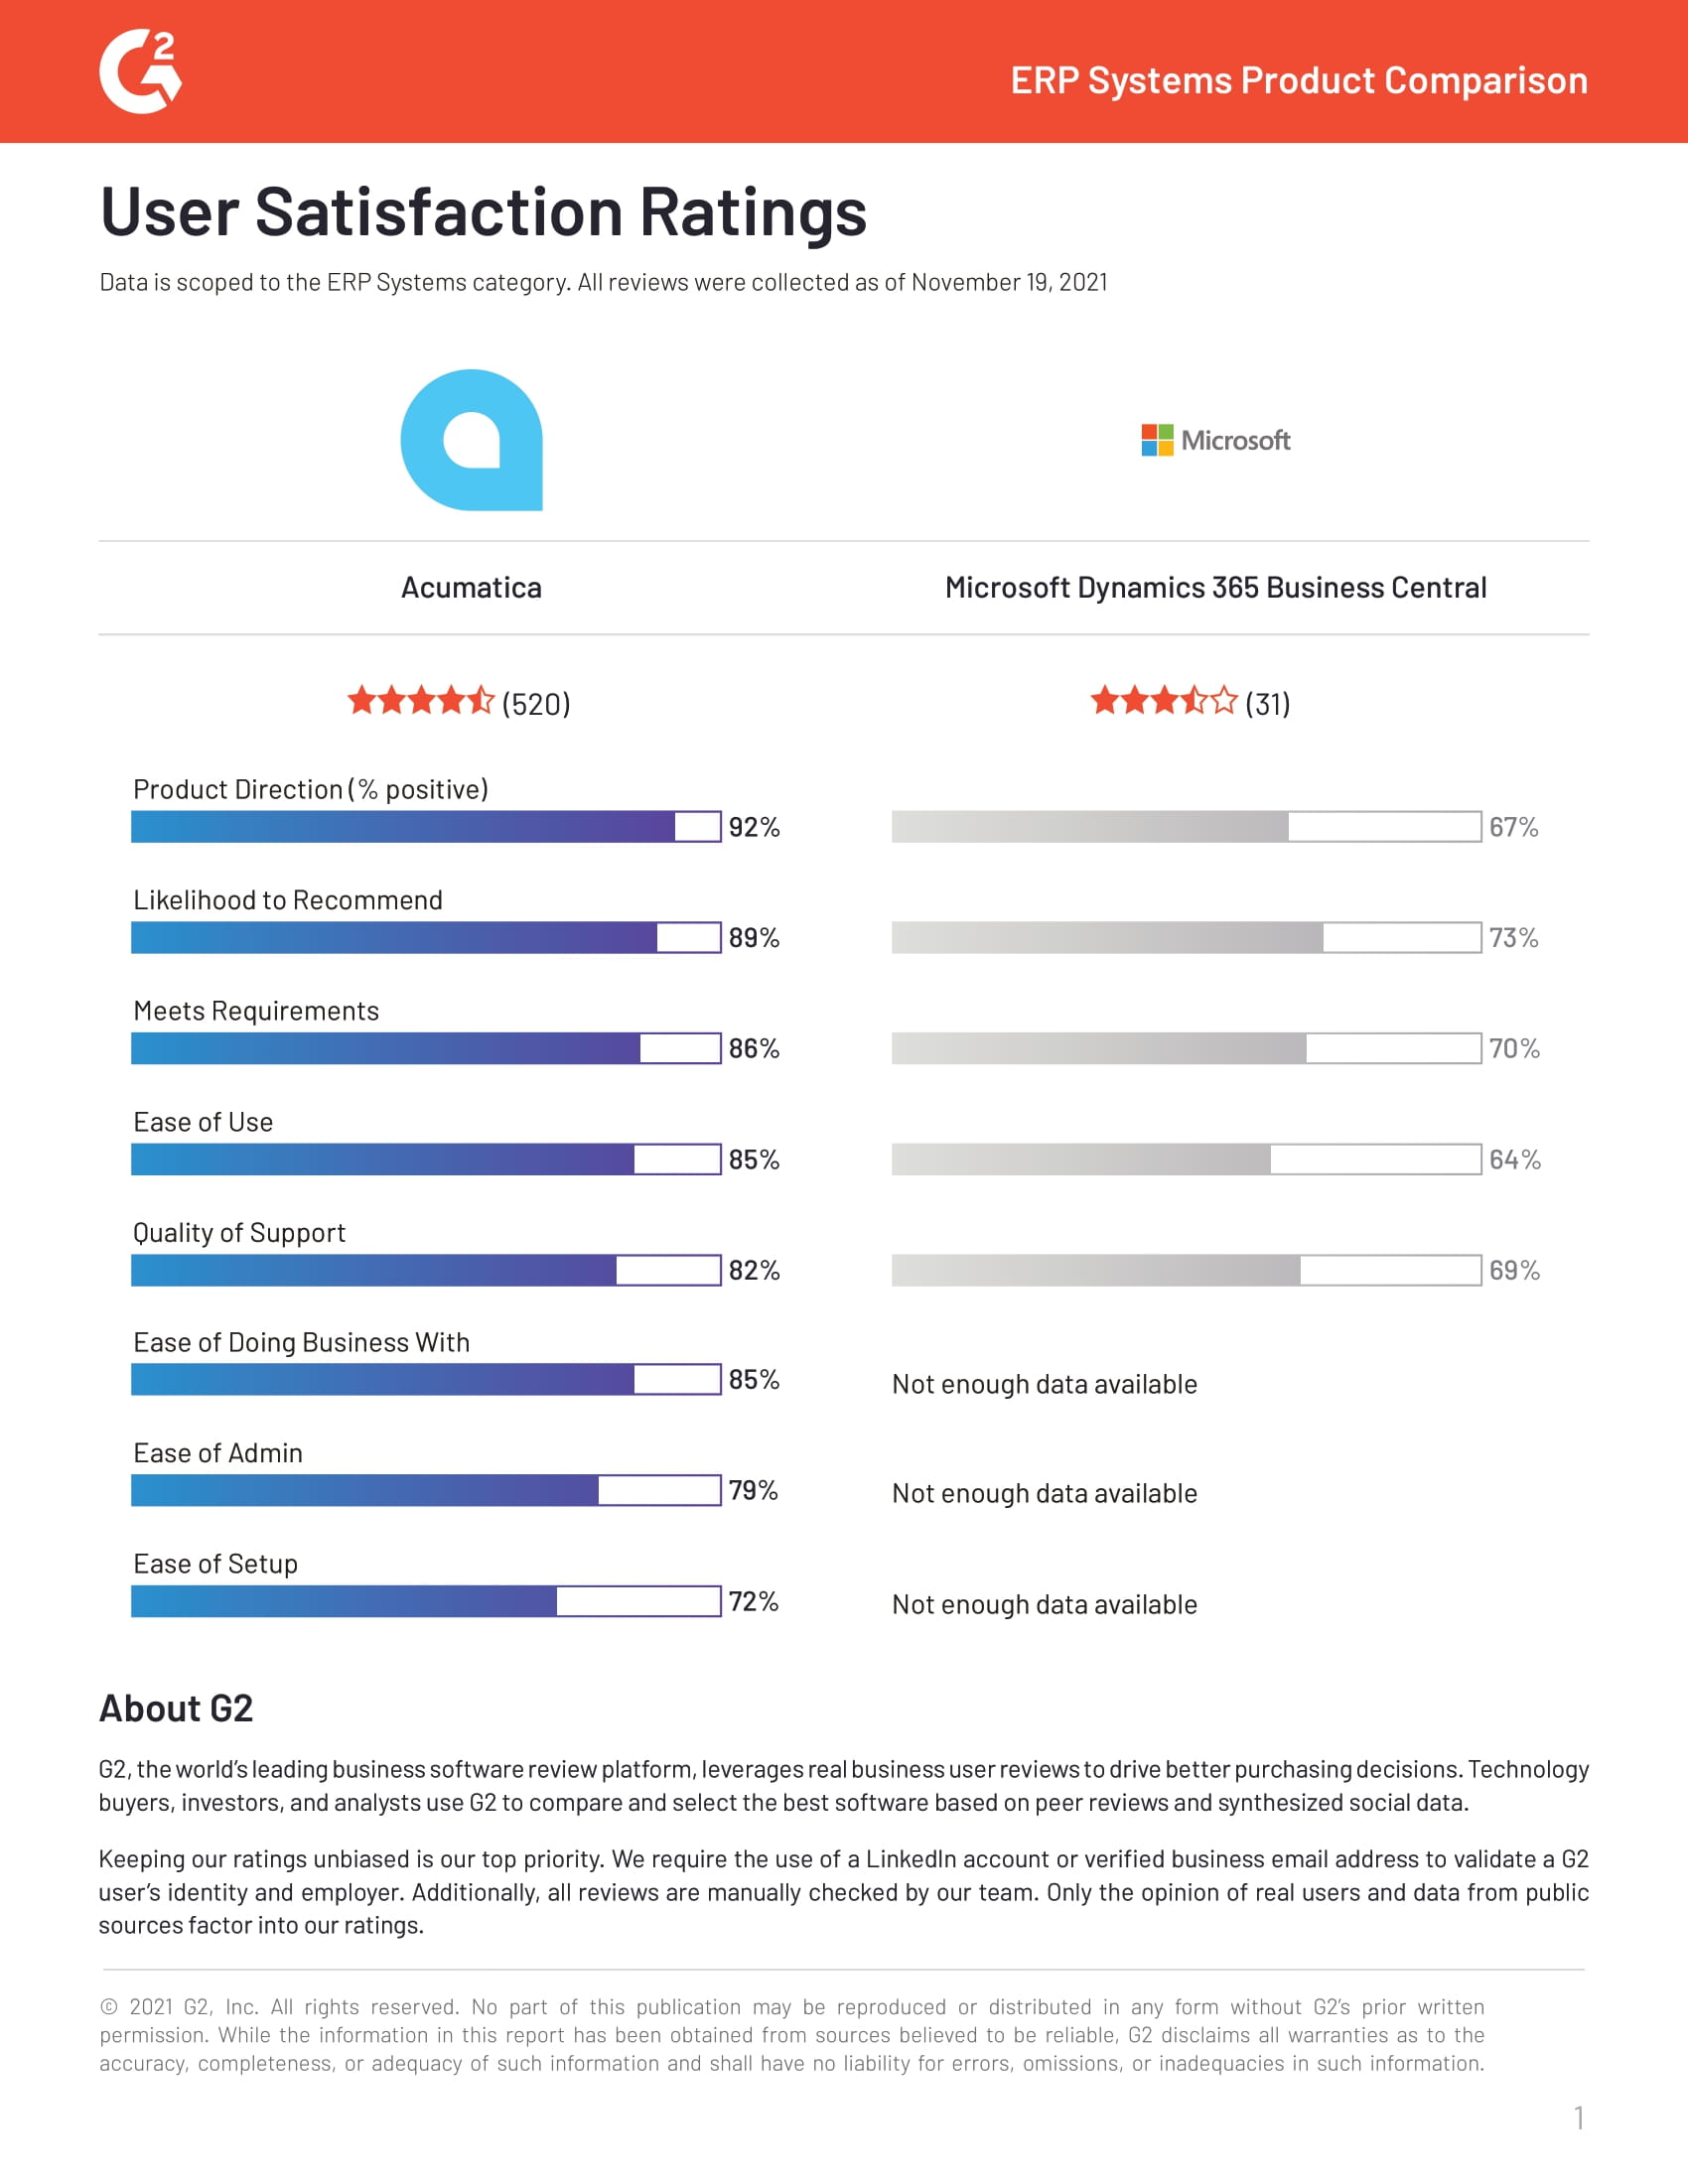 G2Crowd User Satisfaction Ratings 2021 (Microsoft Dynamics)